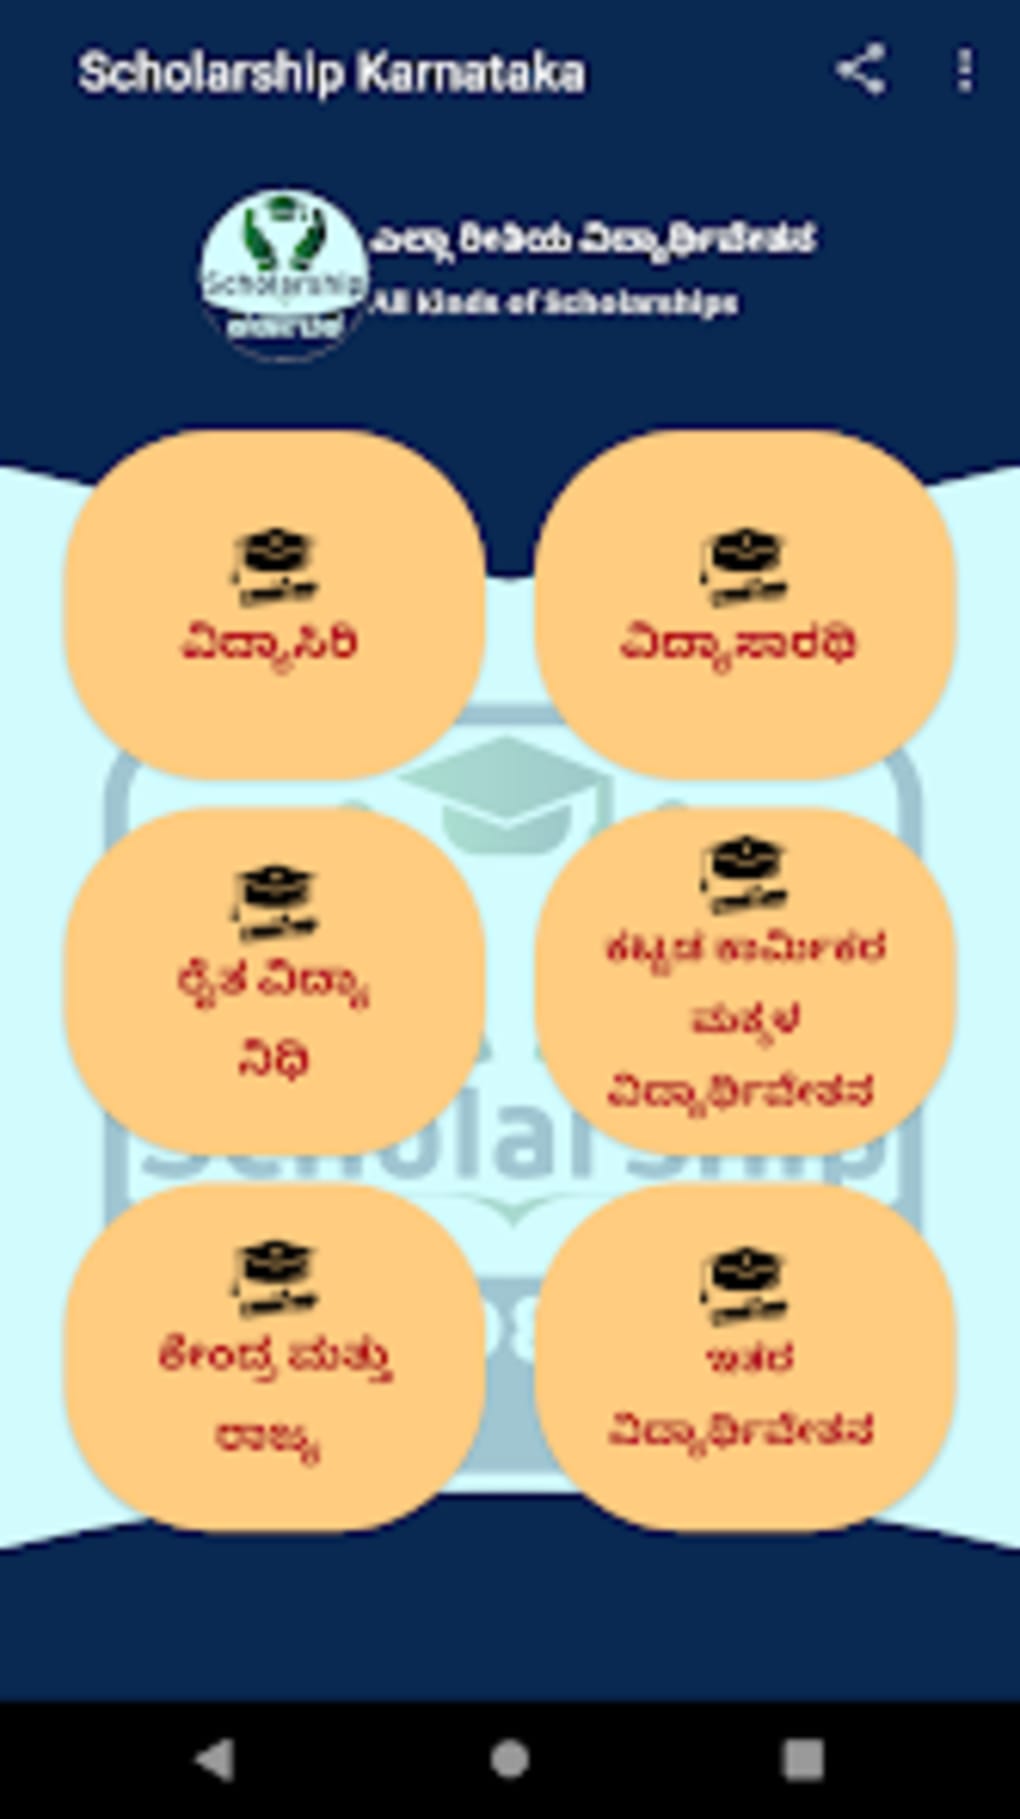 Scholarship Karnataka for Android - Download